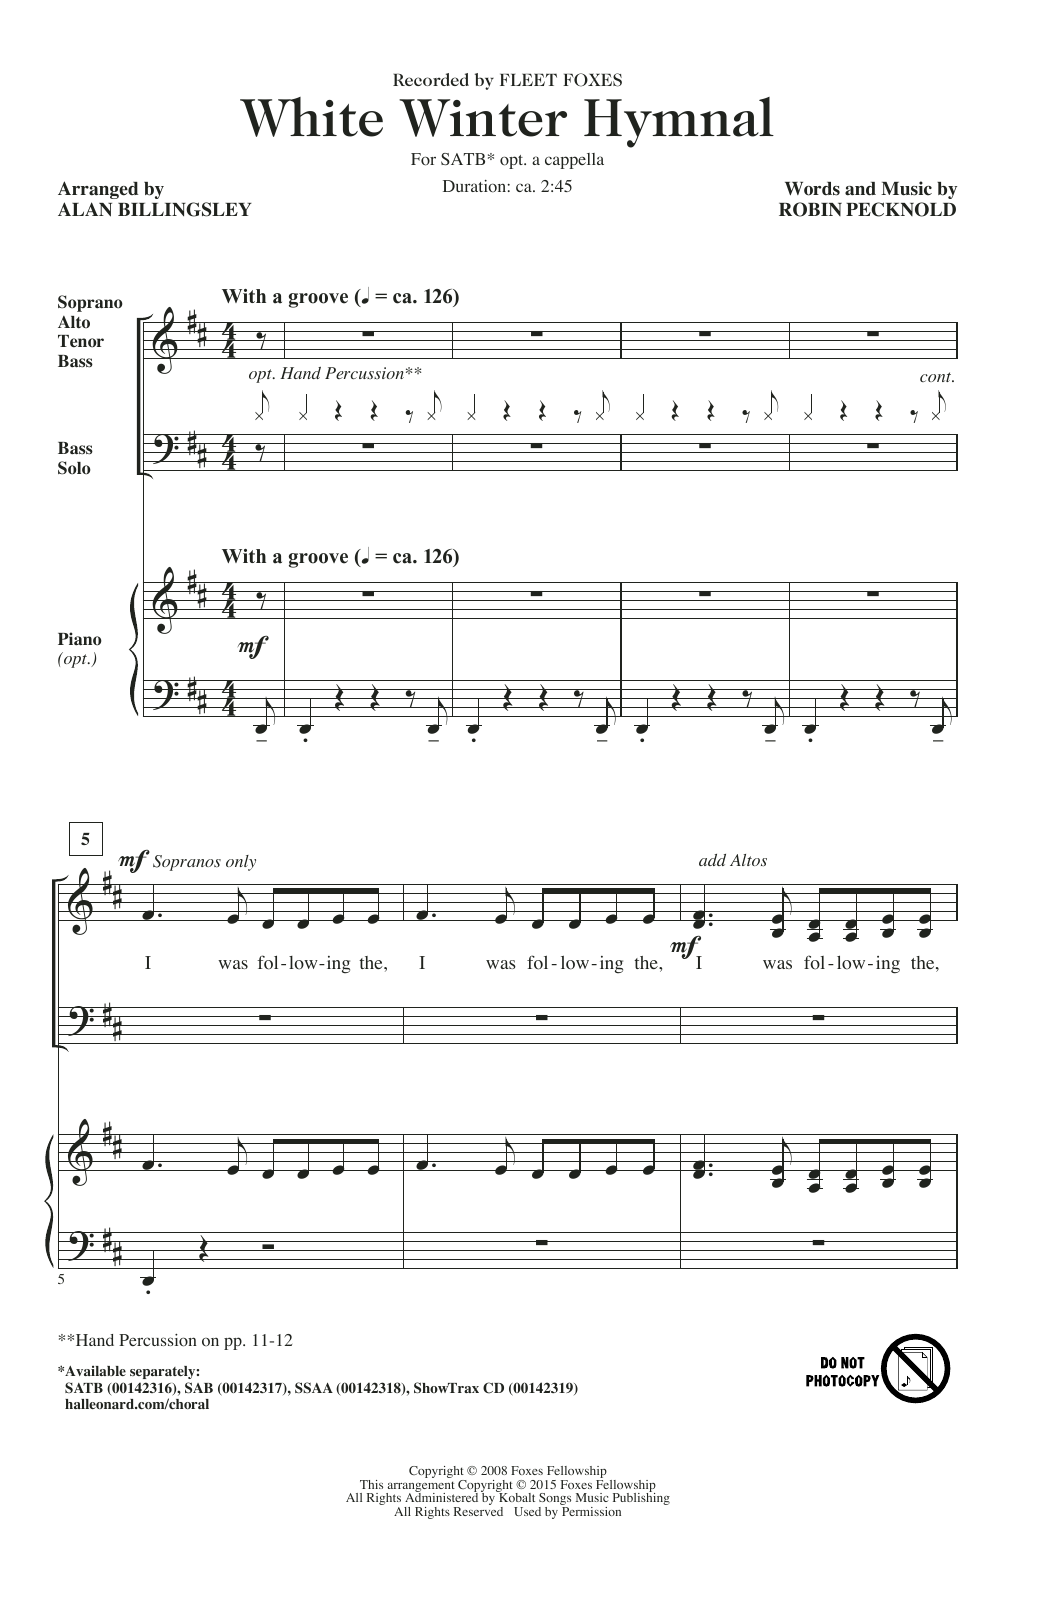 Pentatonix White Winter Hymnal (arr. Alan Billingsley) Sheet Music Notes & Chords for SAB - Download or Print PDF